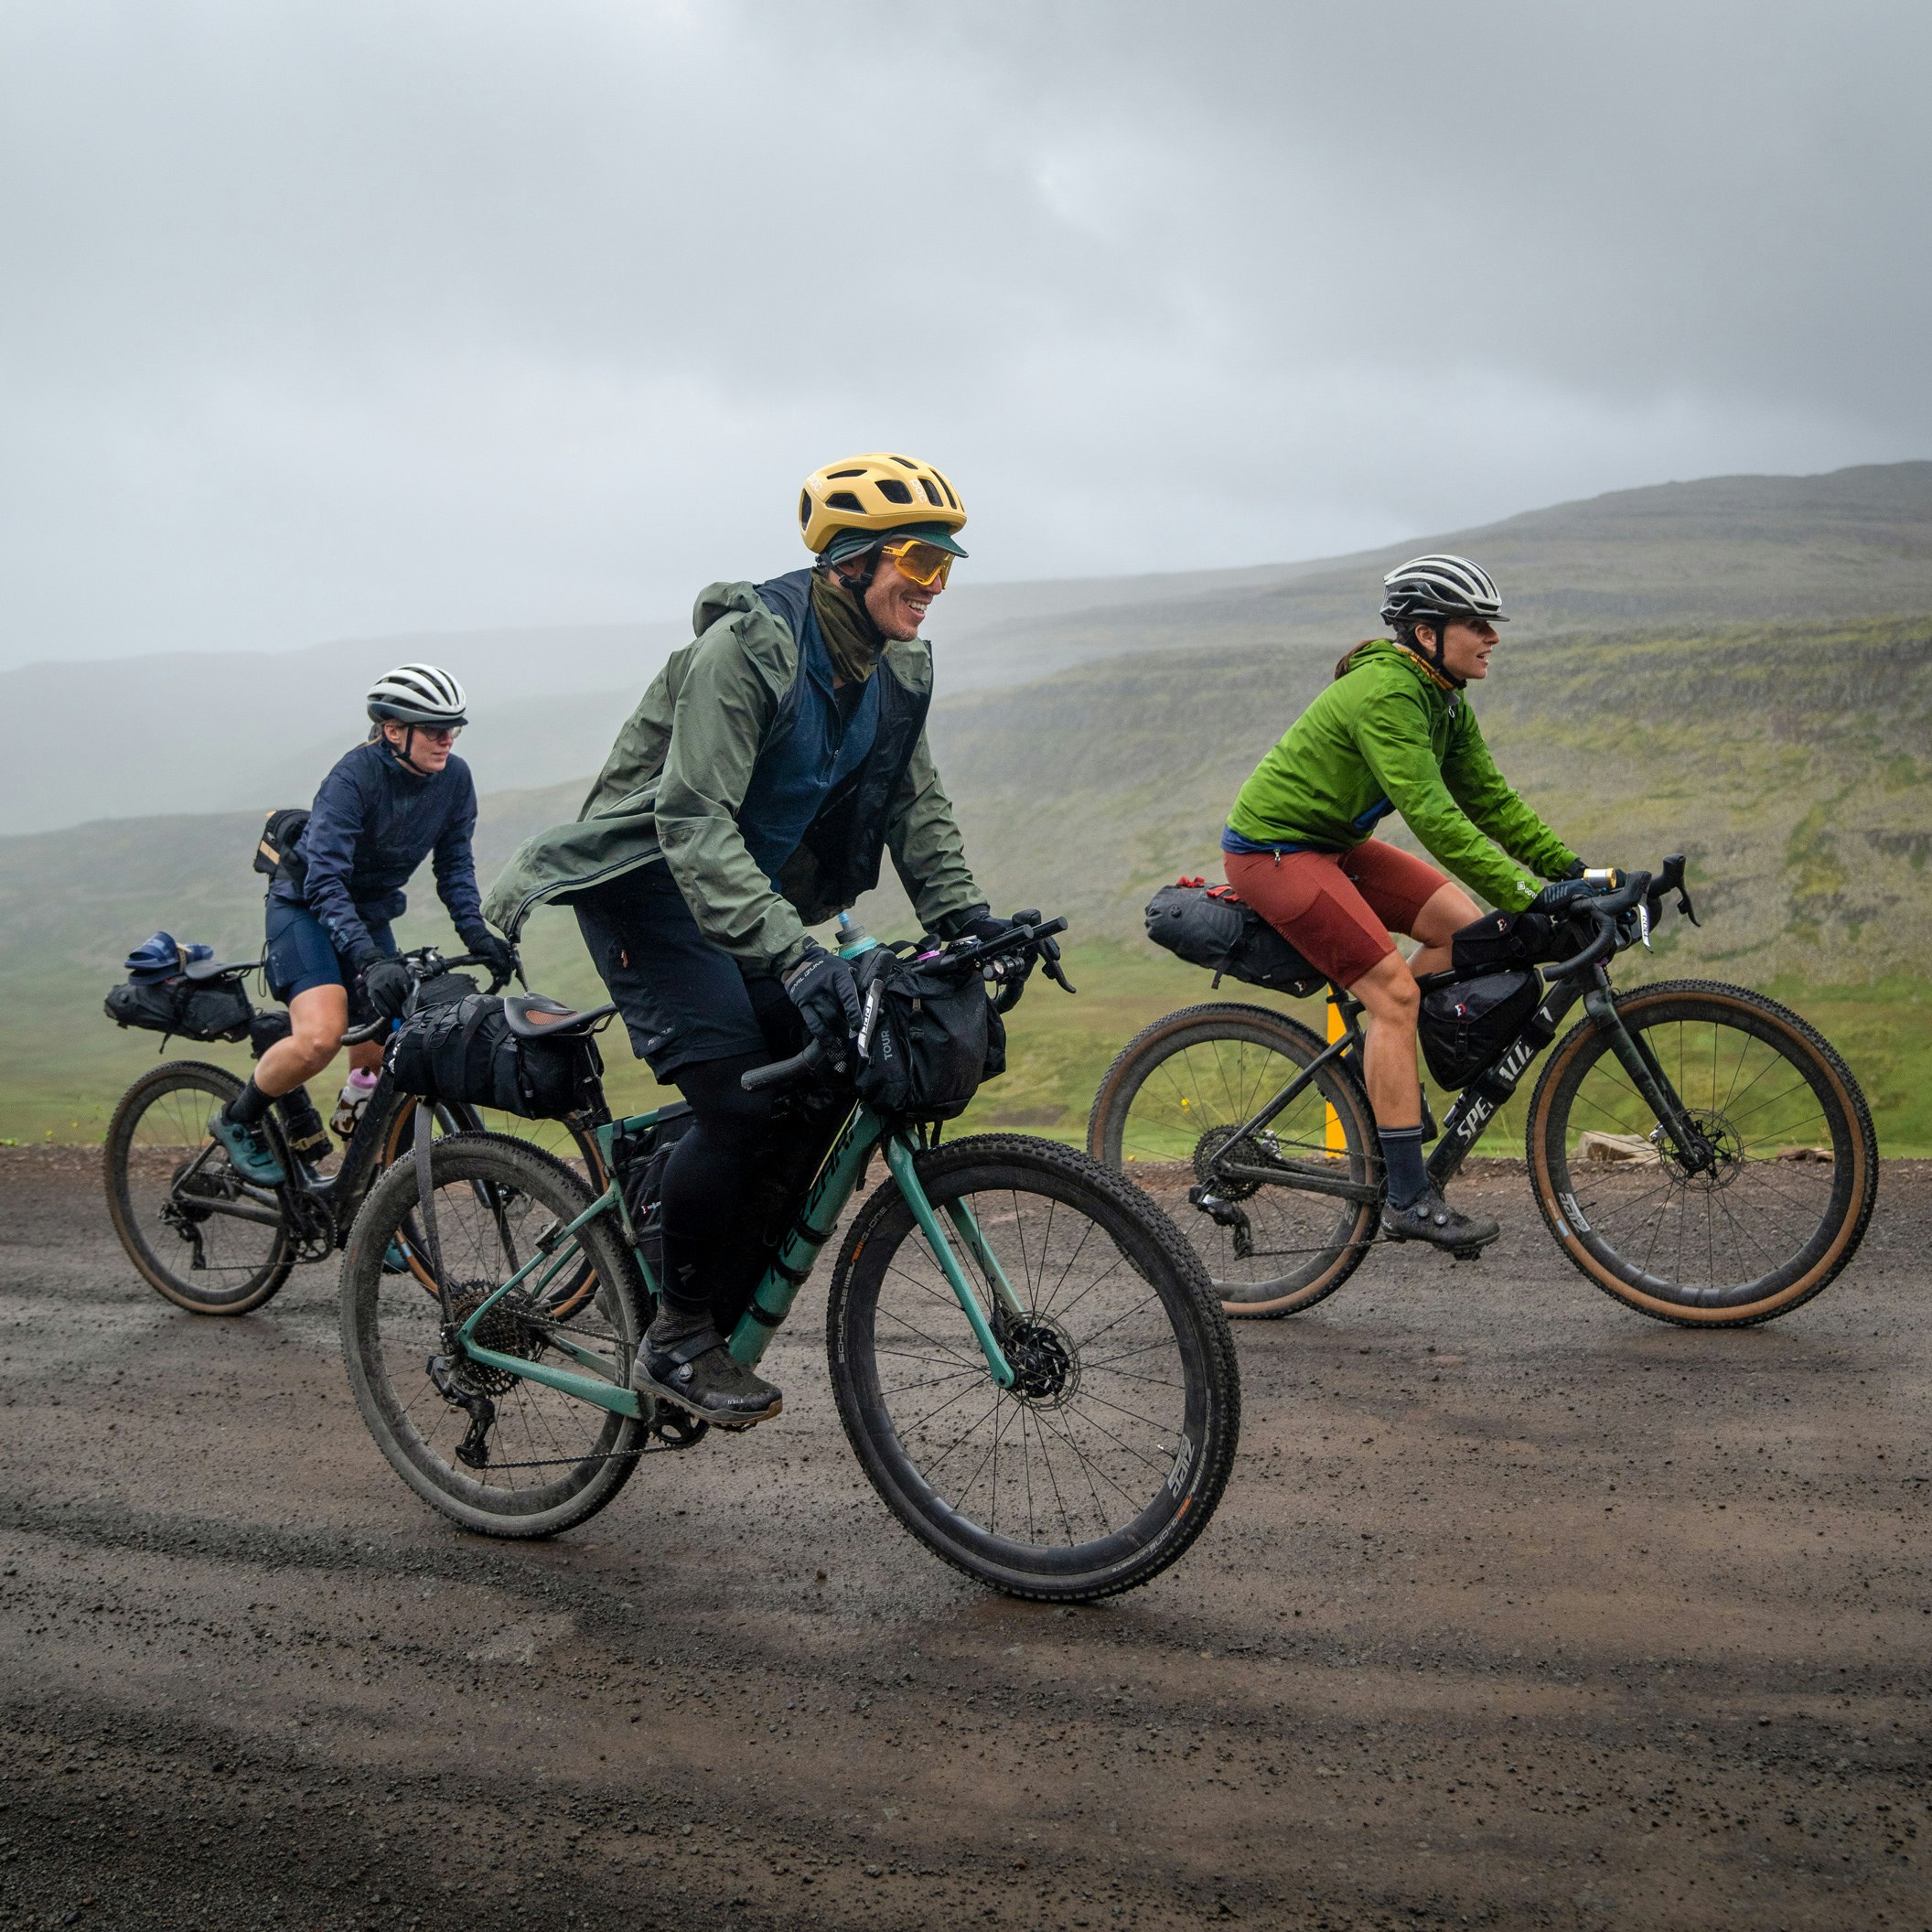 The group rides through a rainy stretch.